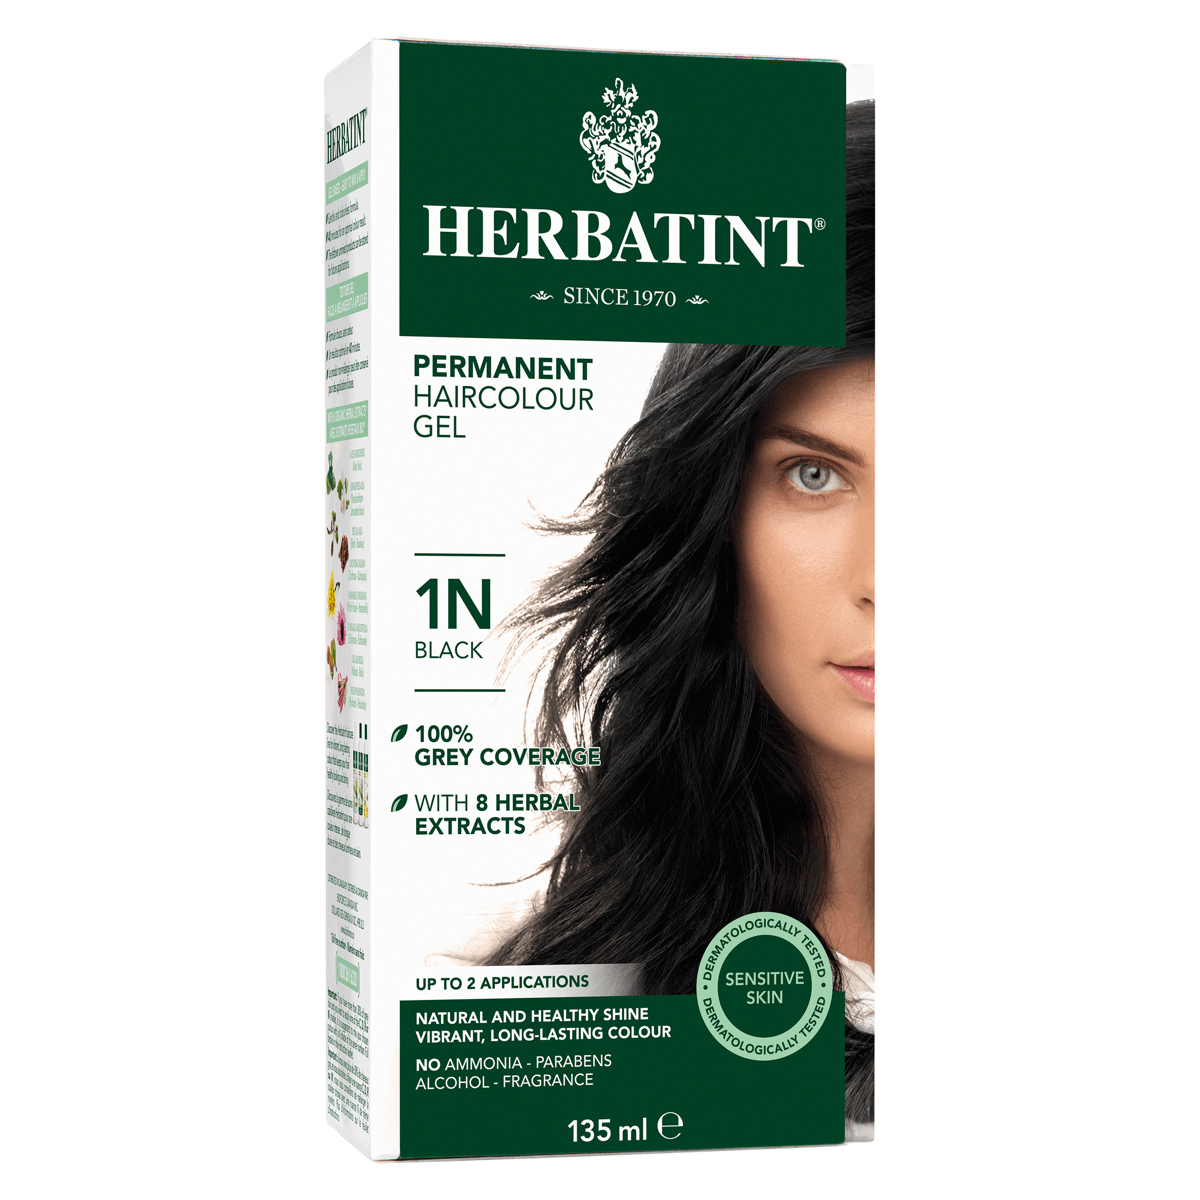 Herbatint Permanent Haircolour Gel Black 1N, 135ml Online